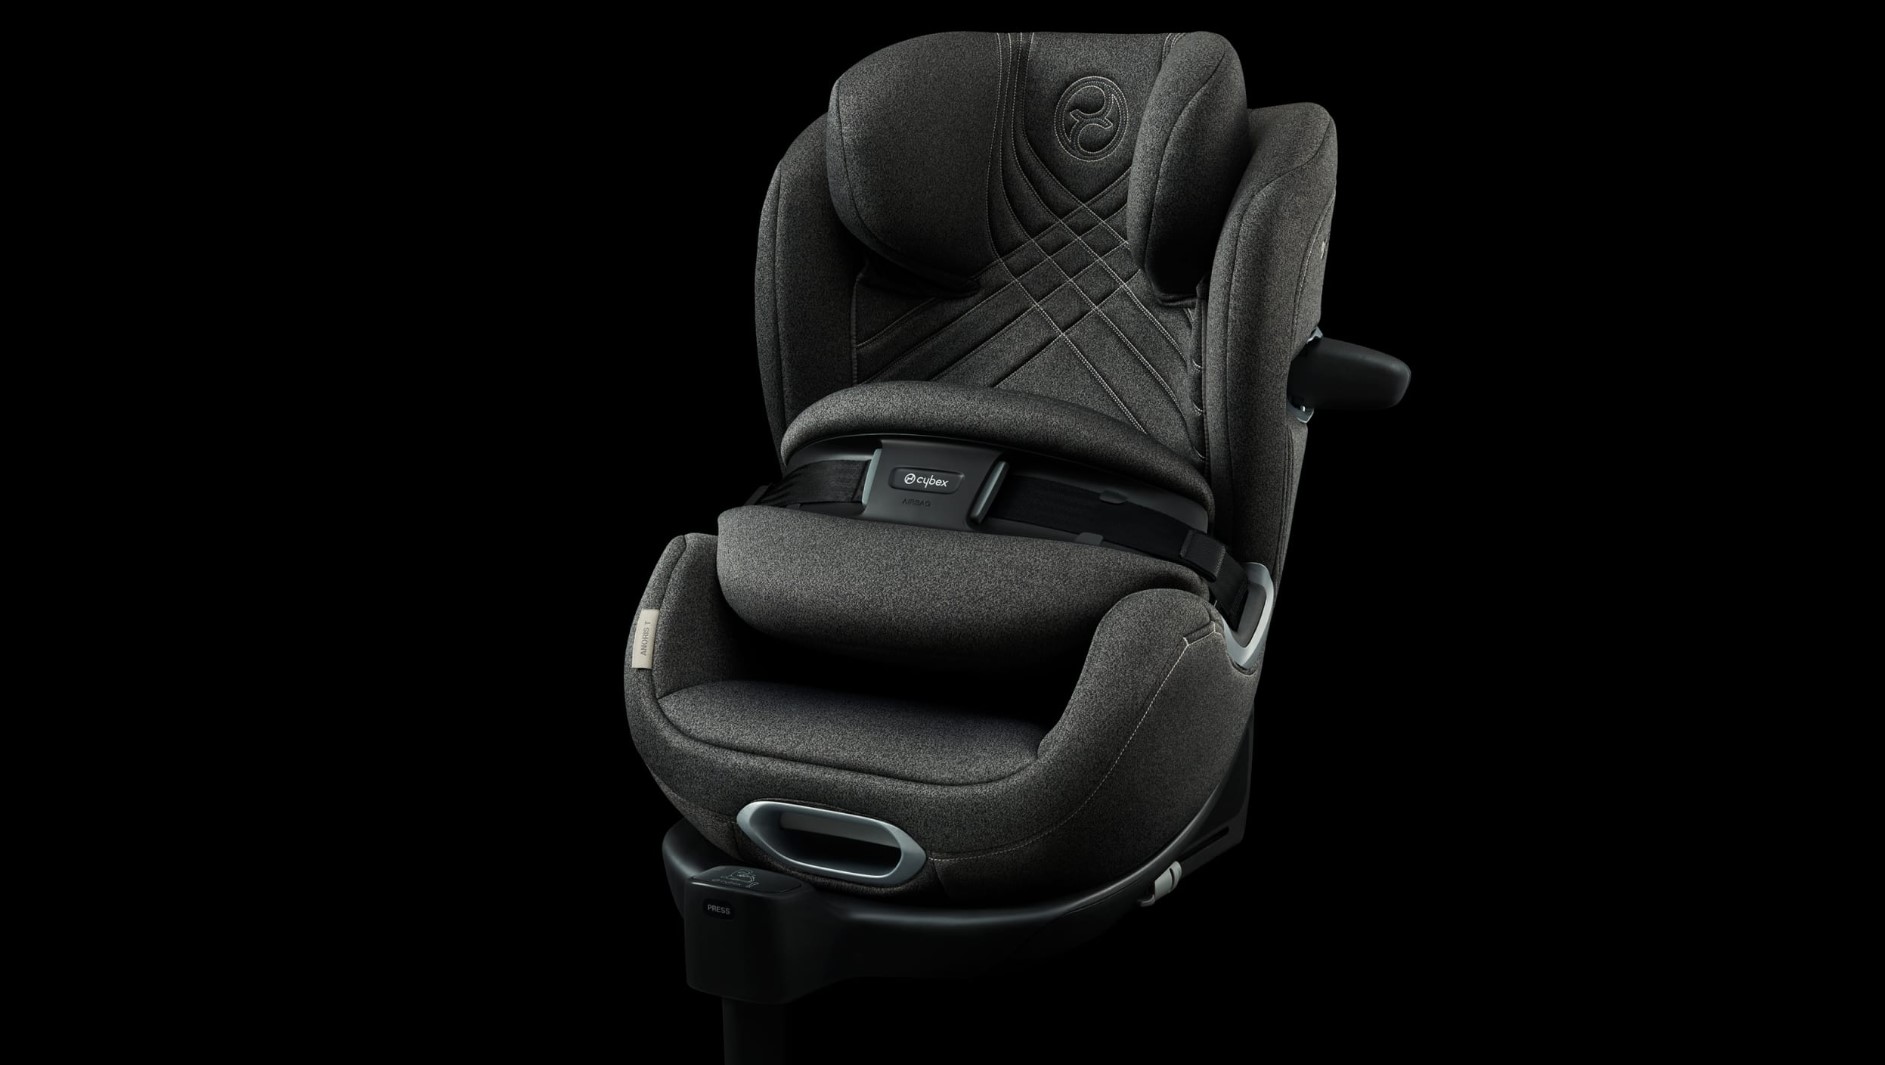 cybex airbag seat 4